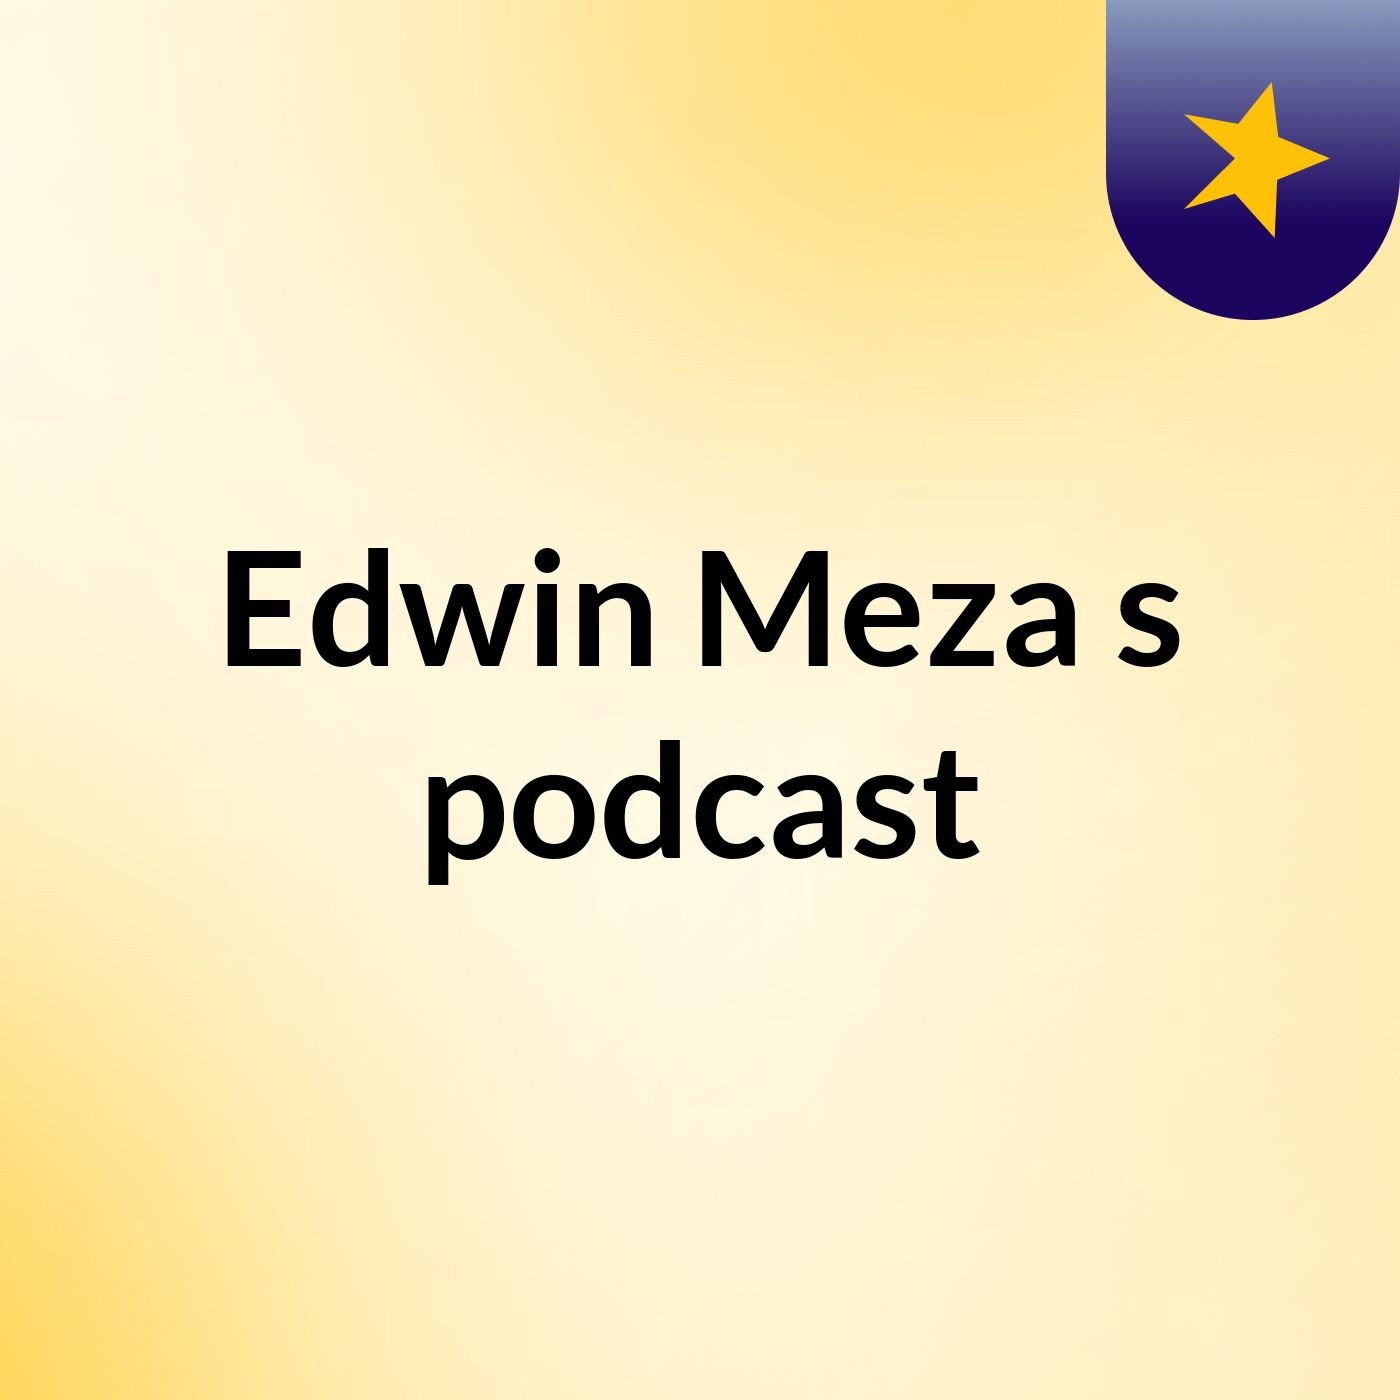 Edwin Meza's podcast